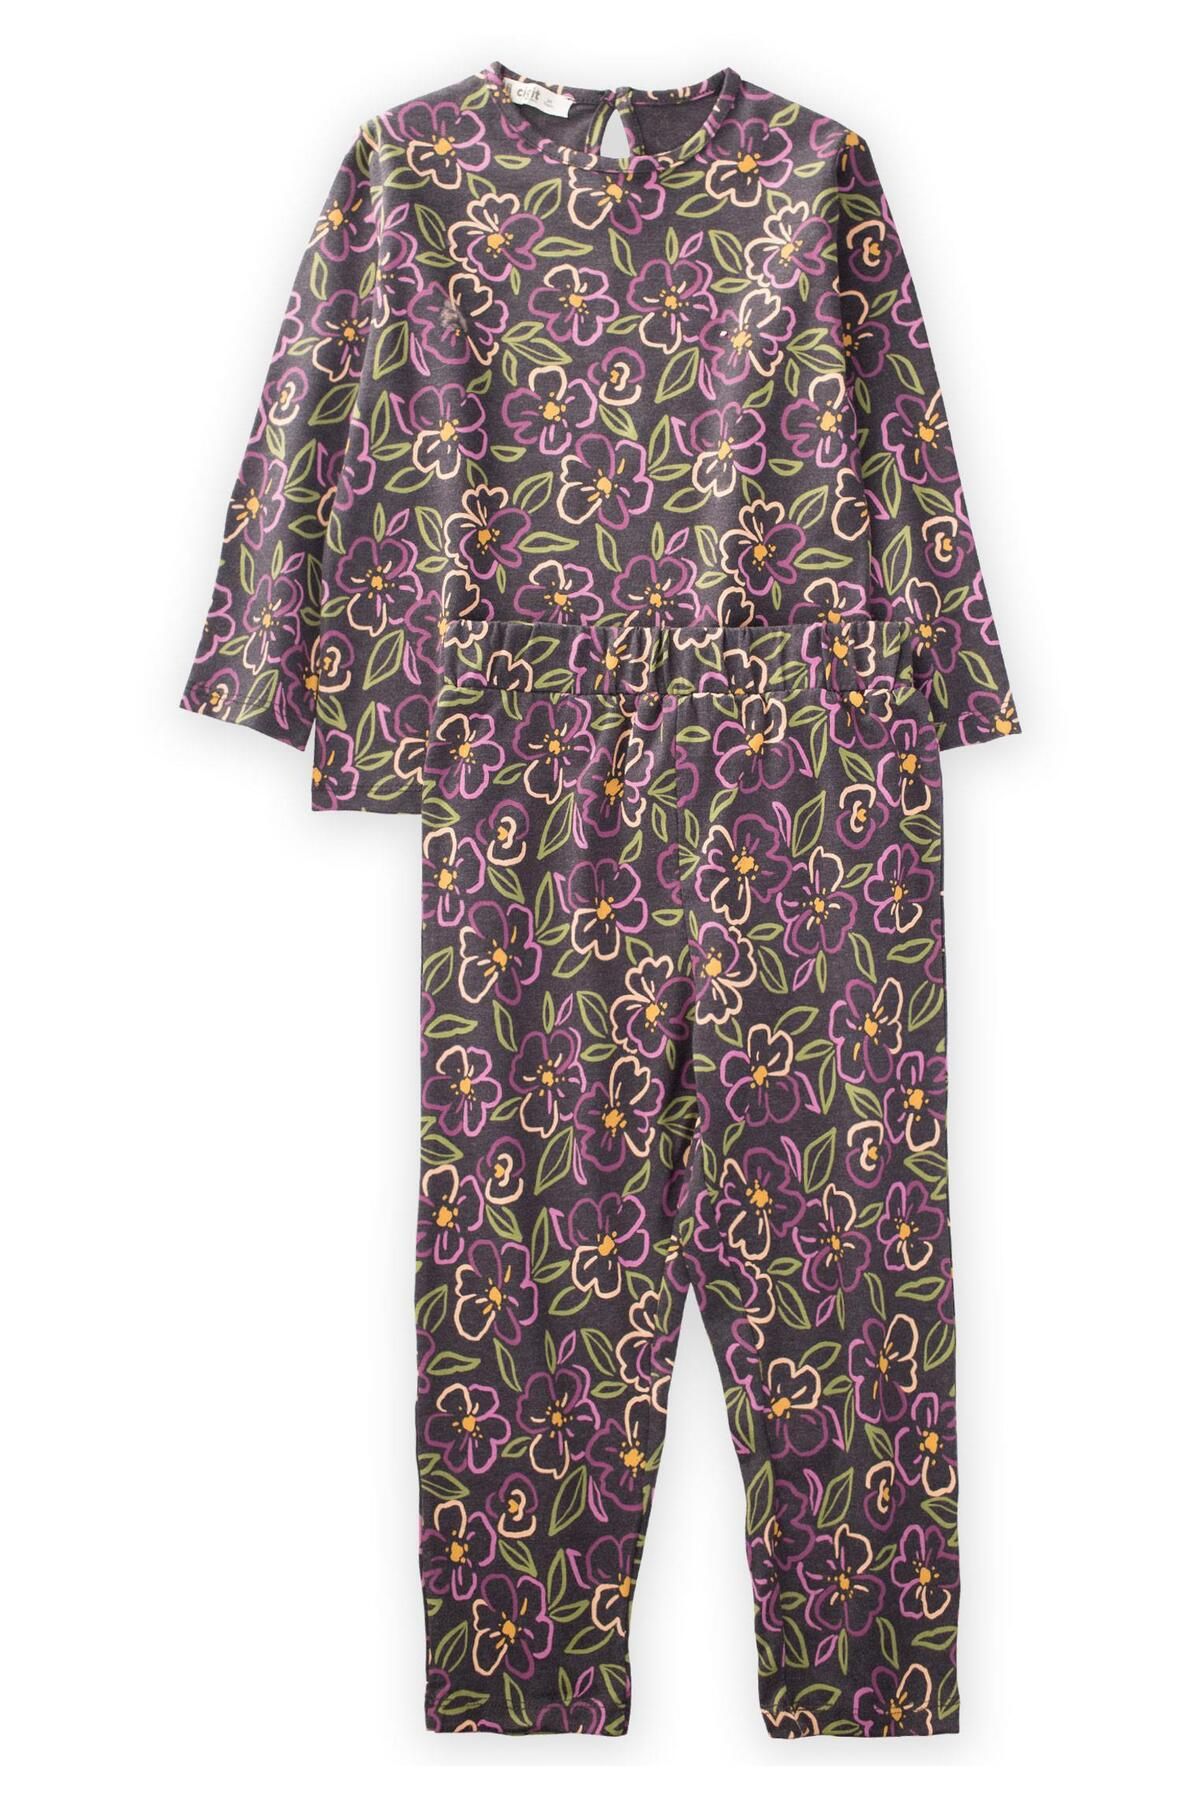 Cigit Desenli Pijama Takim 3-8 Yaş Antrasit